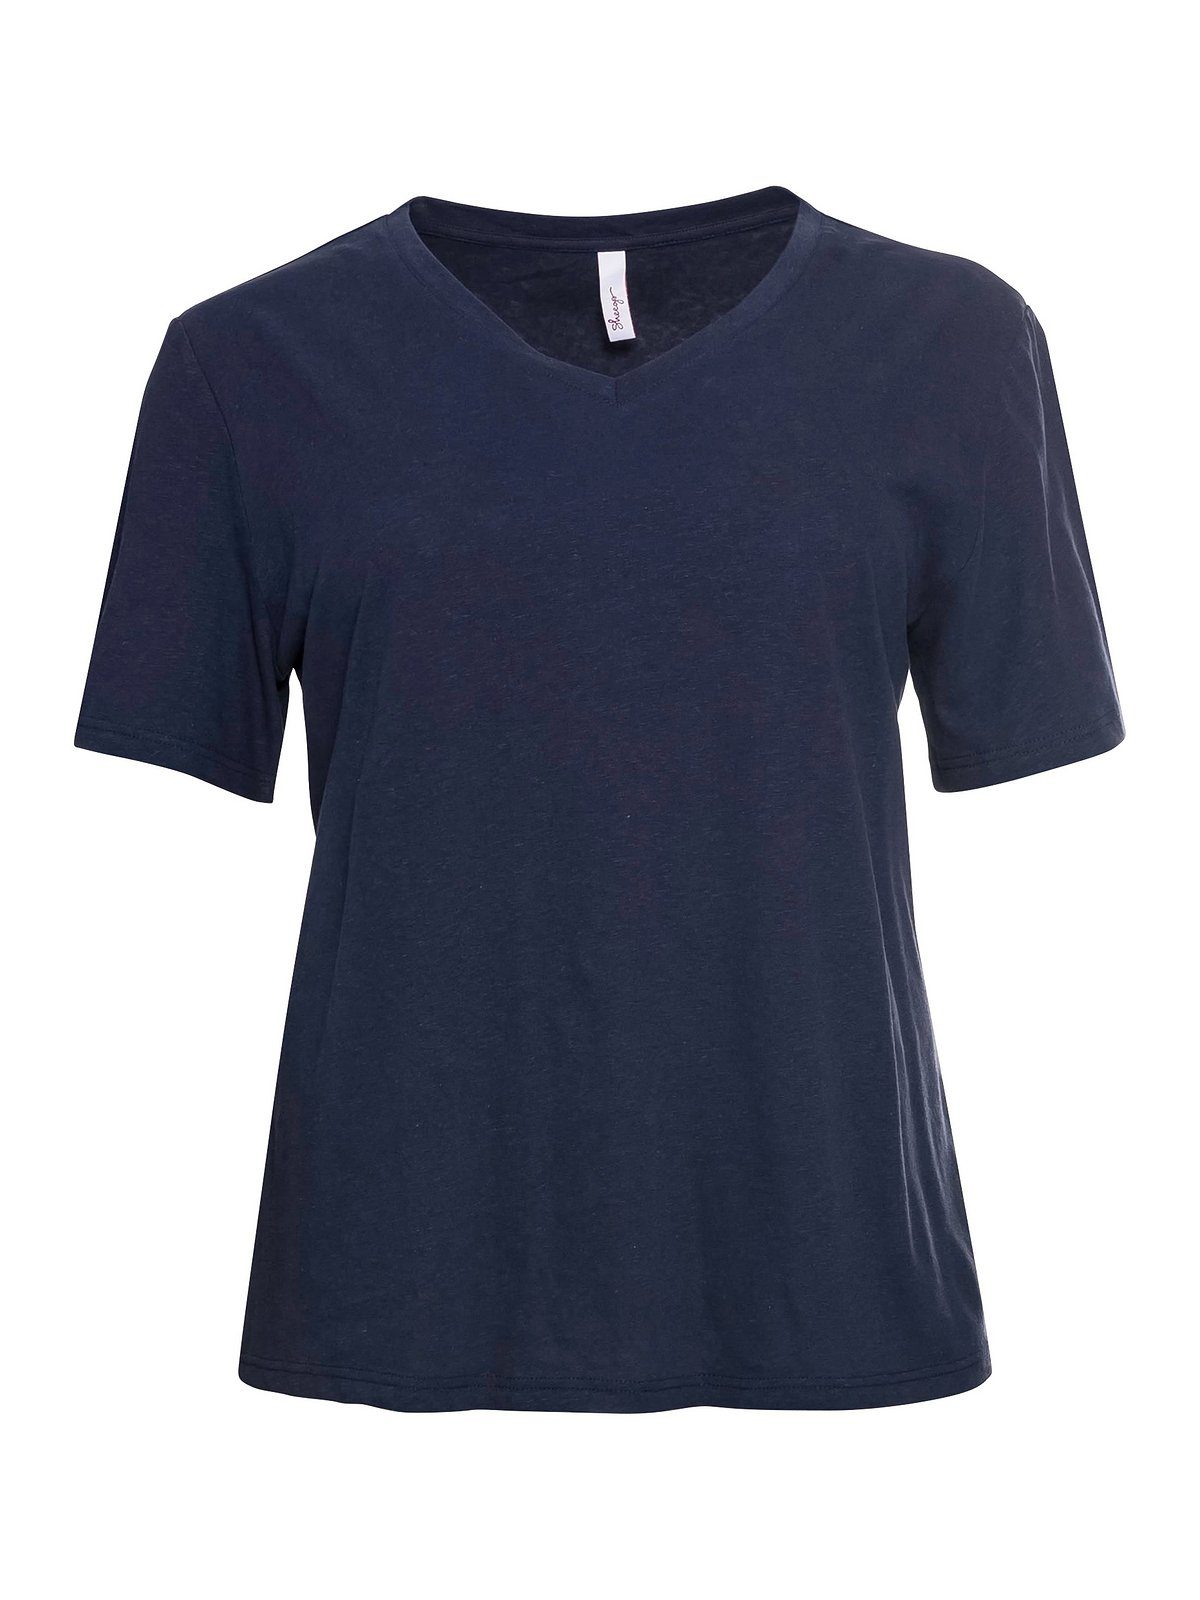 Sheego T-Shirt Große edlem marine aus Leinen-Viskose-Mix Größen